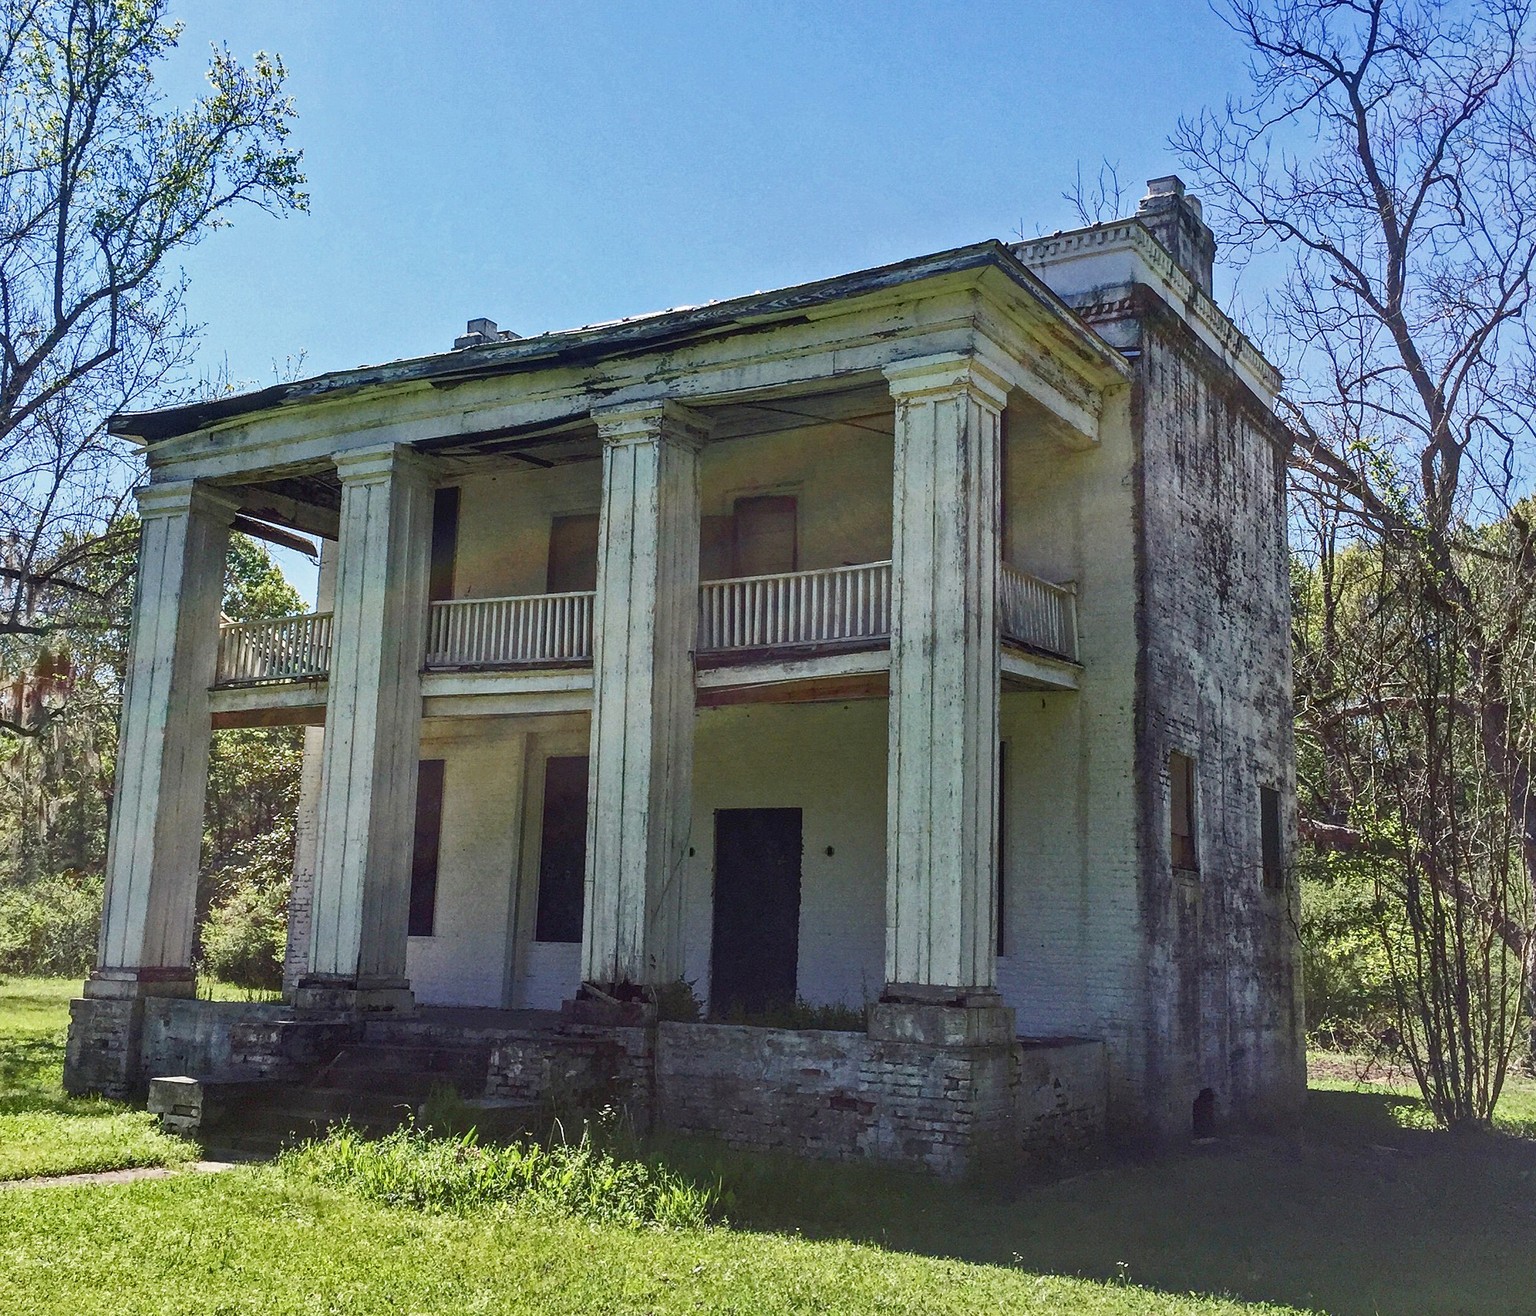 Cahawba, Alabama
ghost town